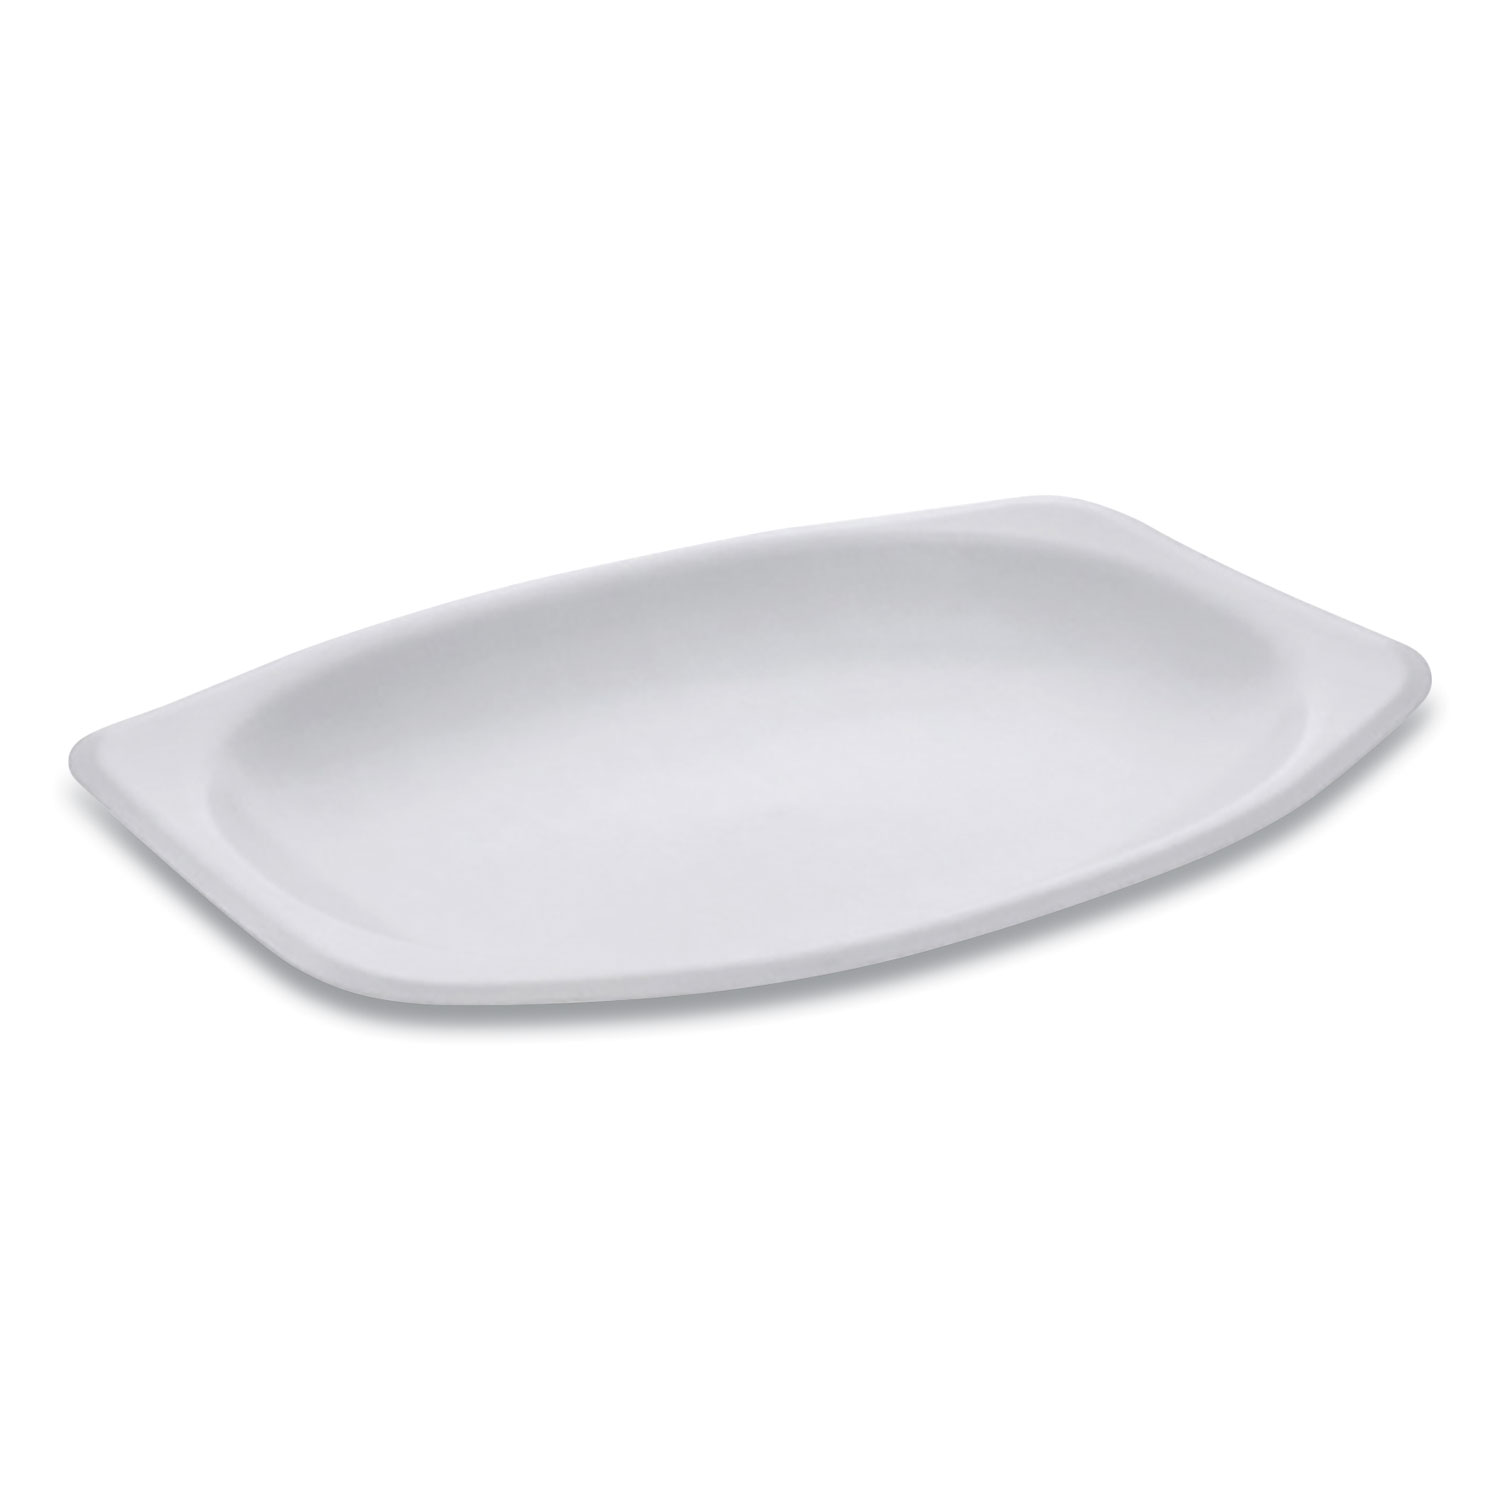 Pactiv Unlaminated Foam Dinnerware, Platter, Oval, 9 x 7, White, 800/Carton